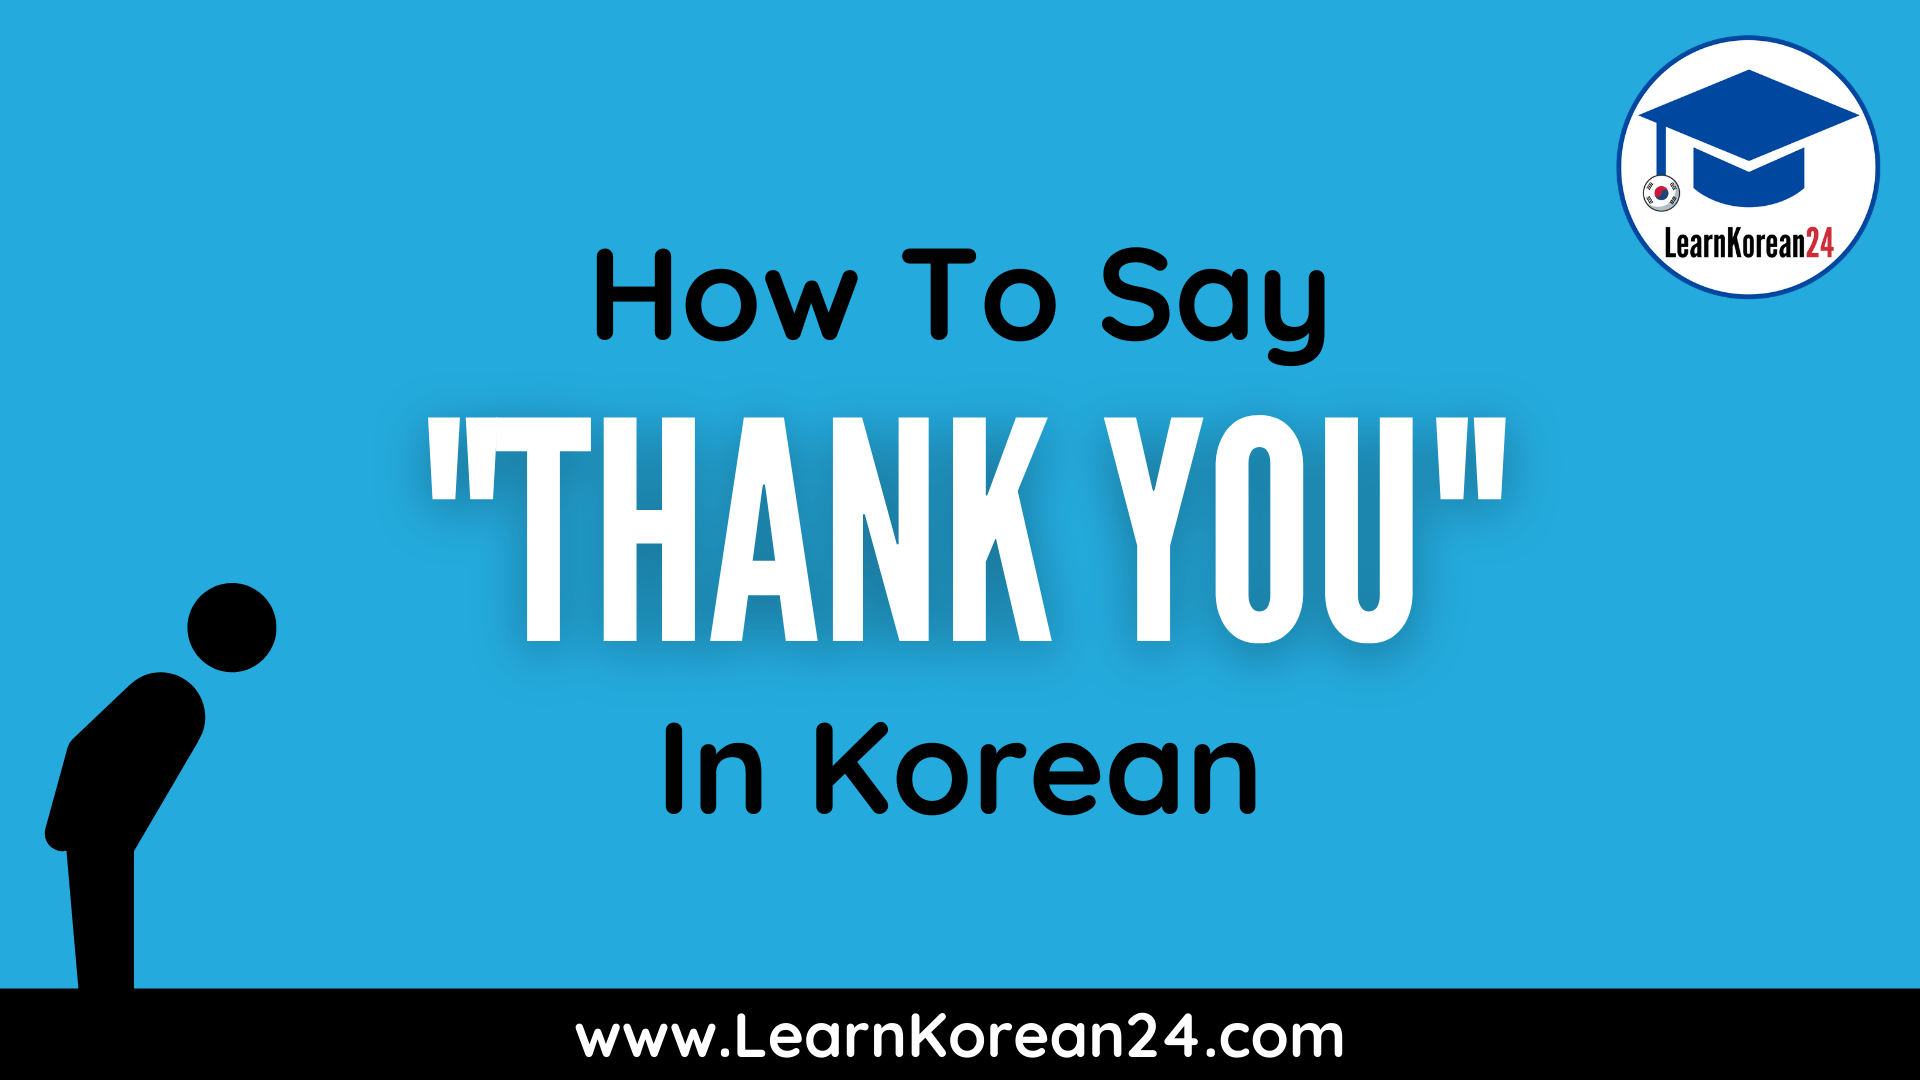 Thank you in korean